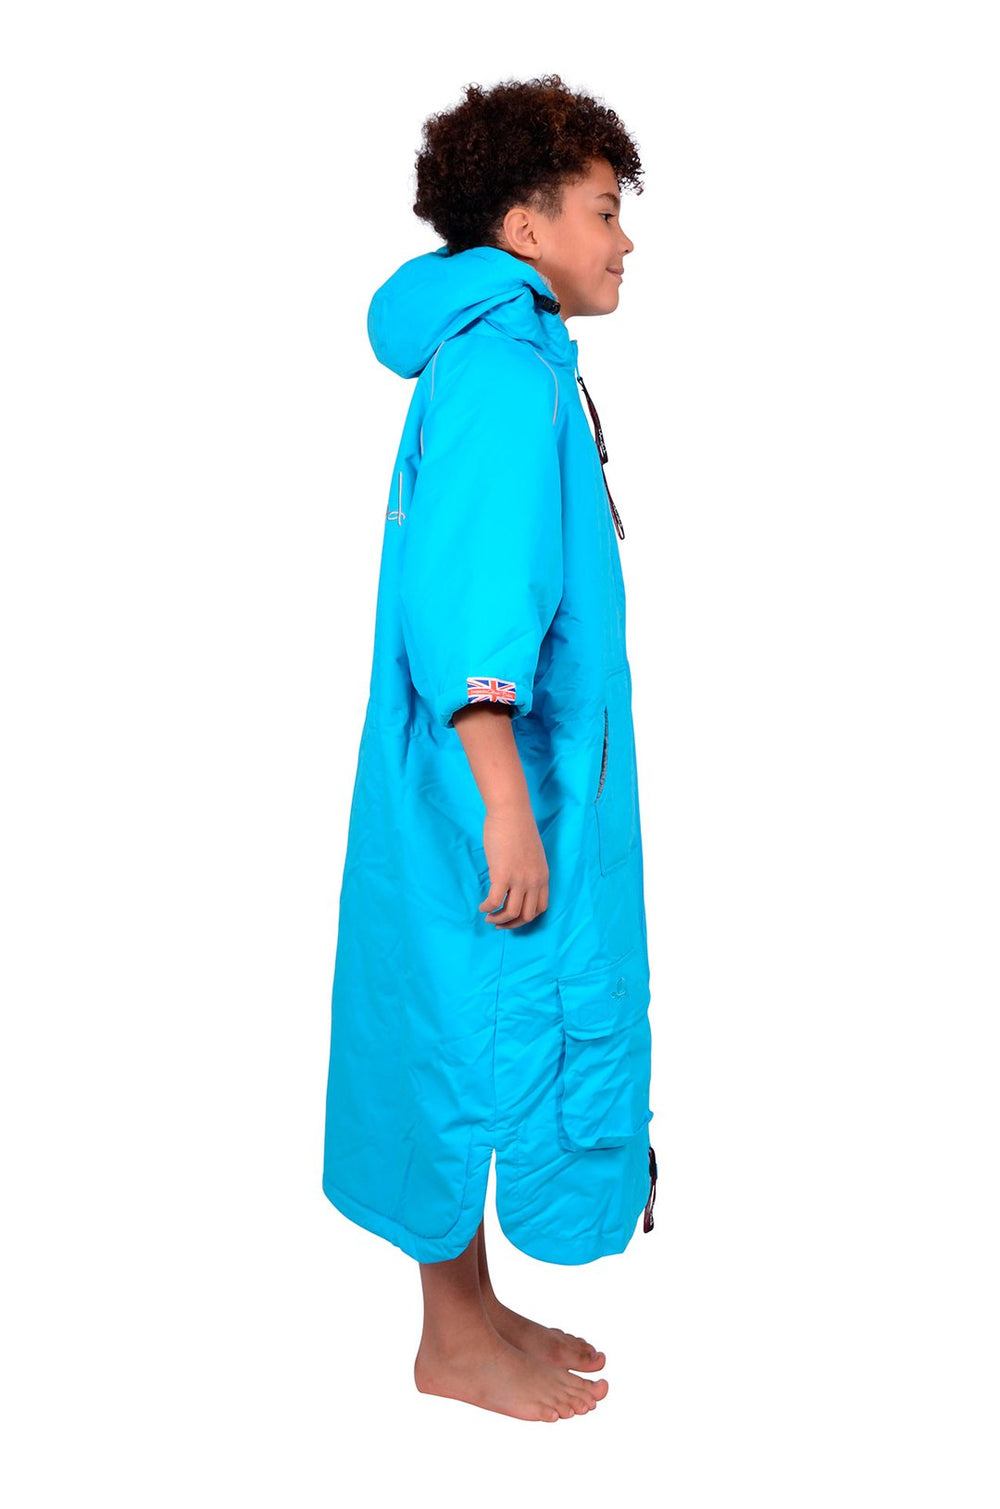 Charlie McLeod - Eco Short Sleeve Changing Robe - Turquoise - Kids